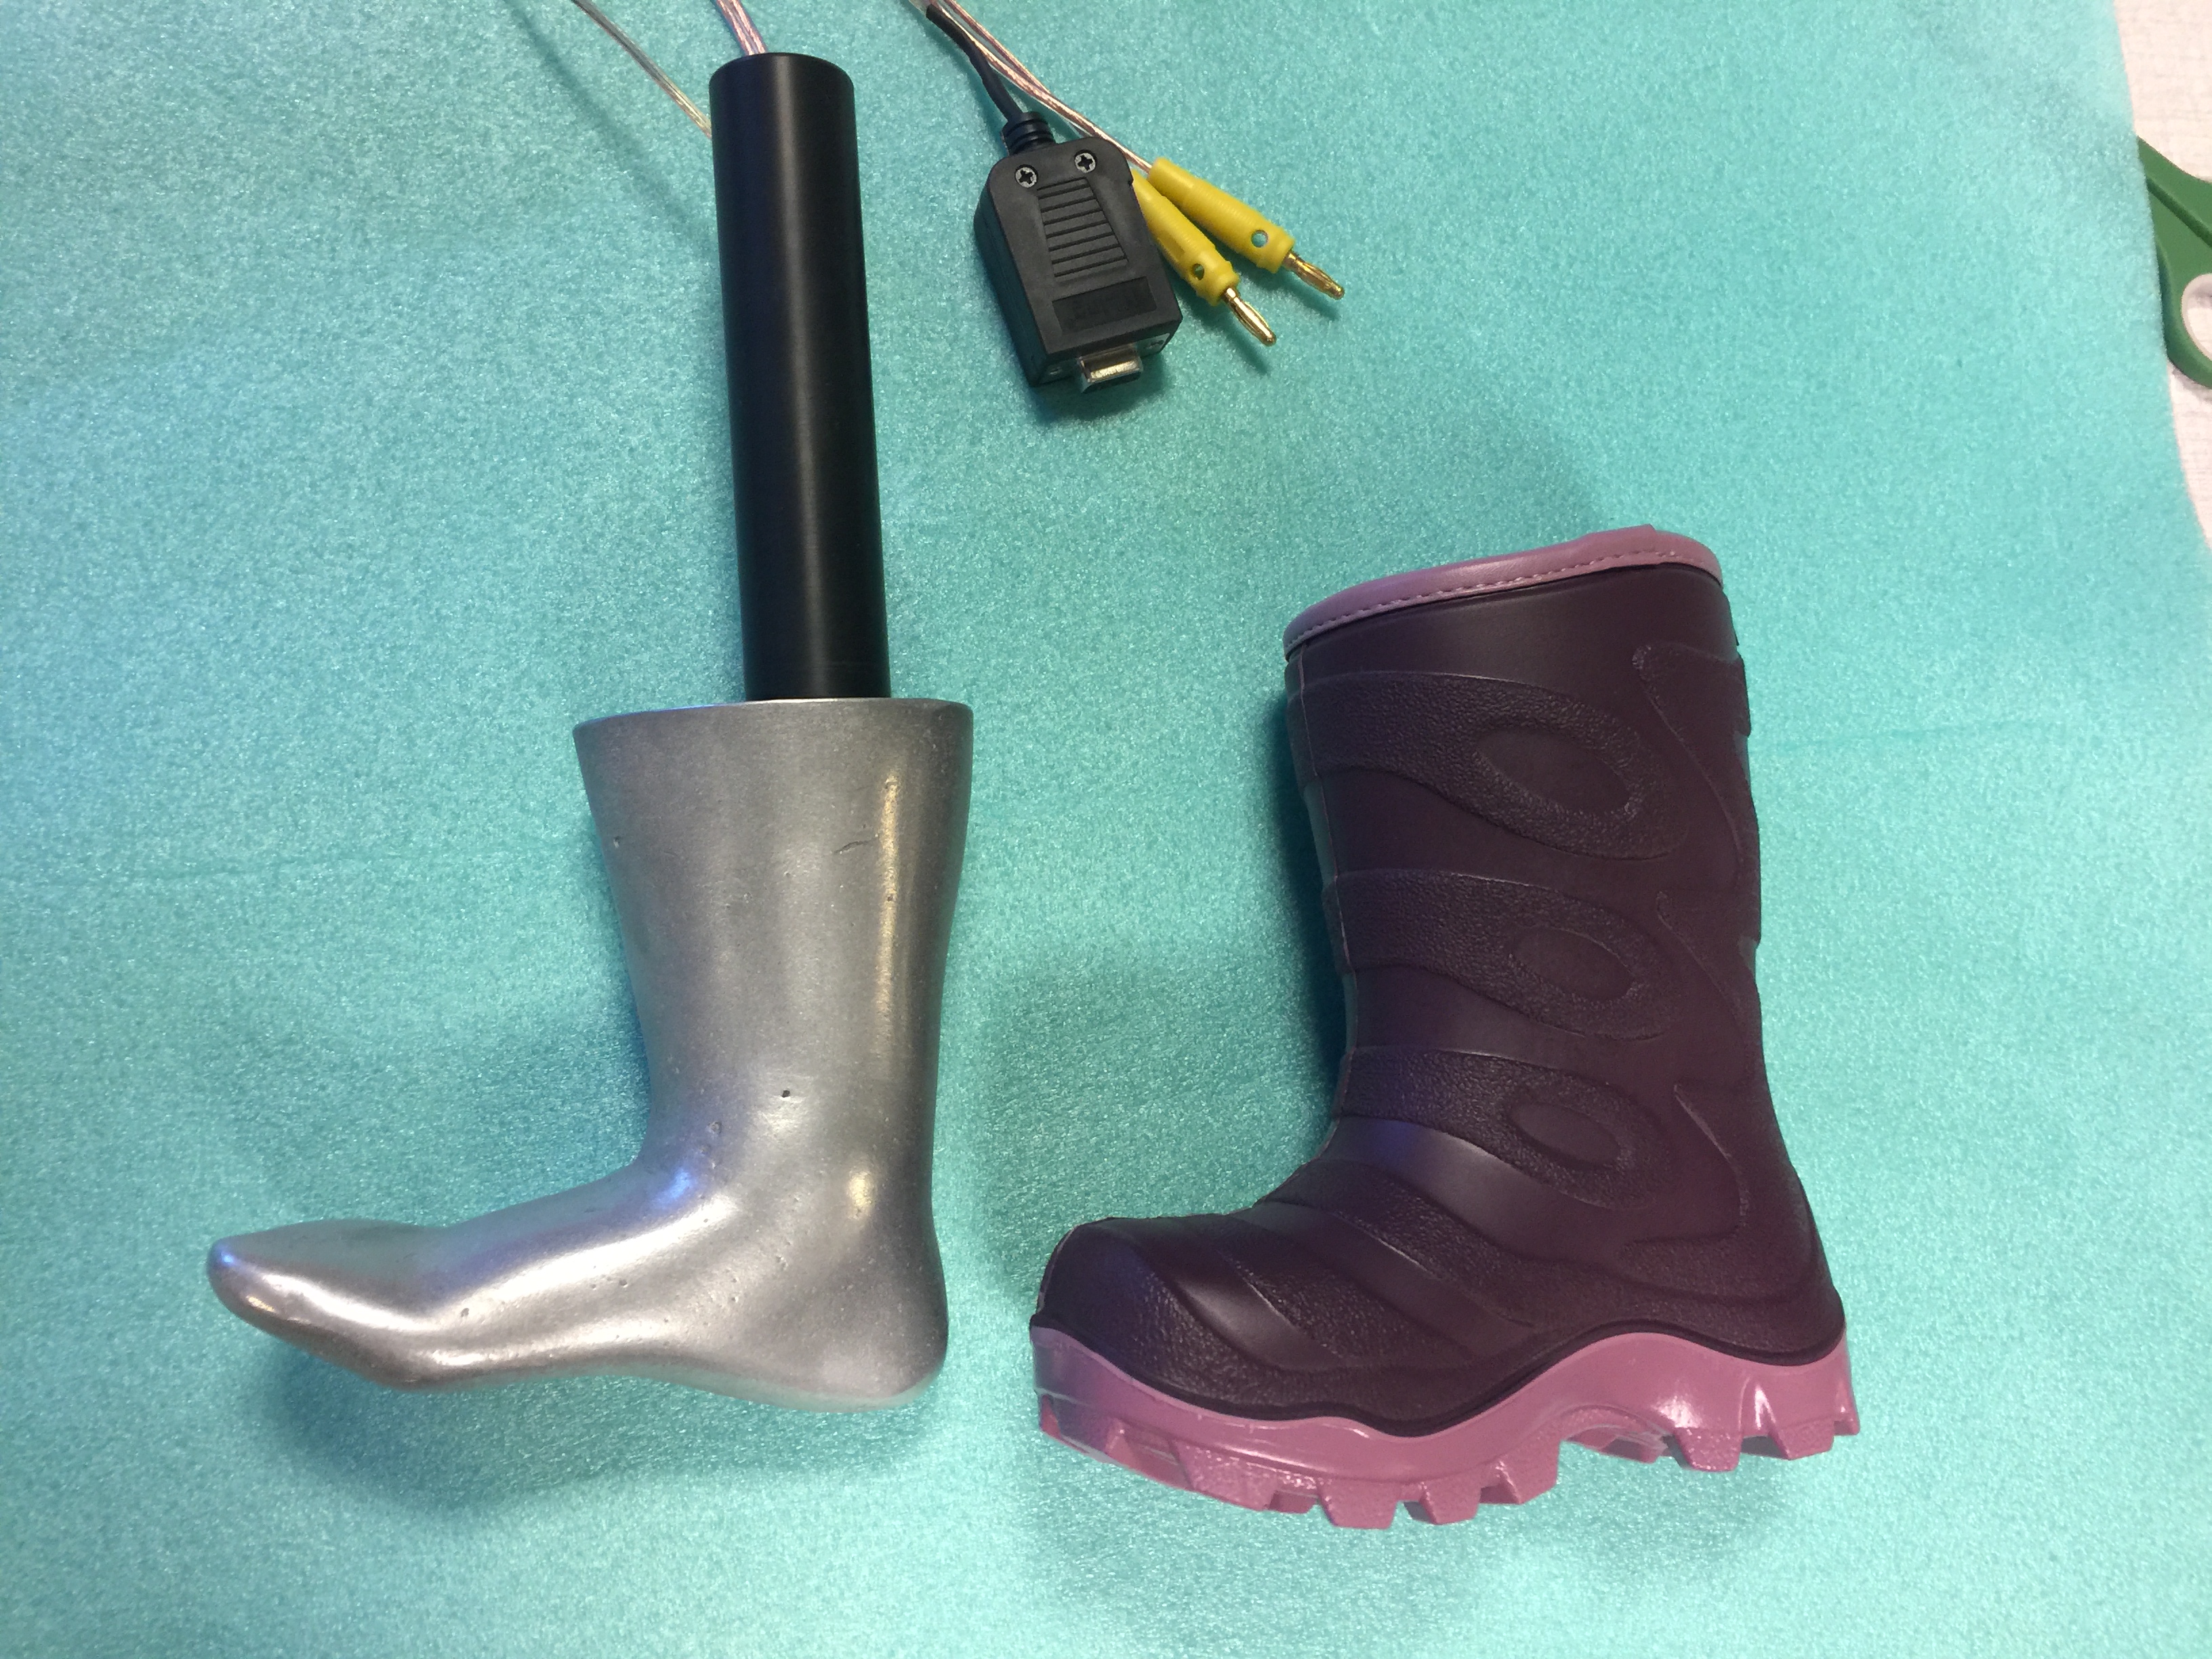 Children's manikin foot for thermal testing of children's footwear.